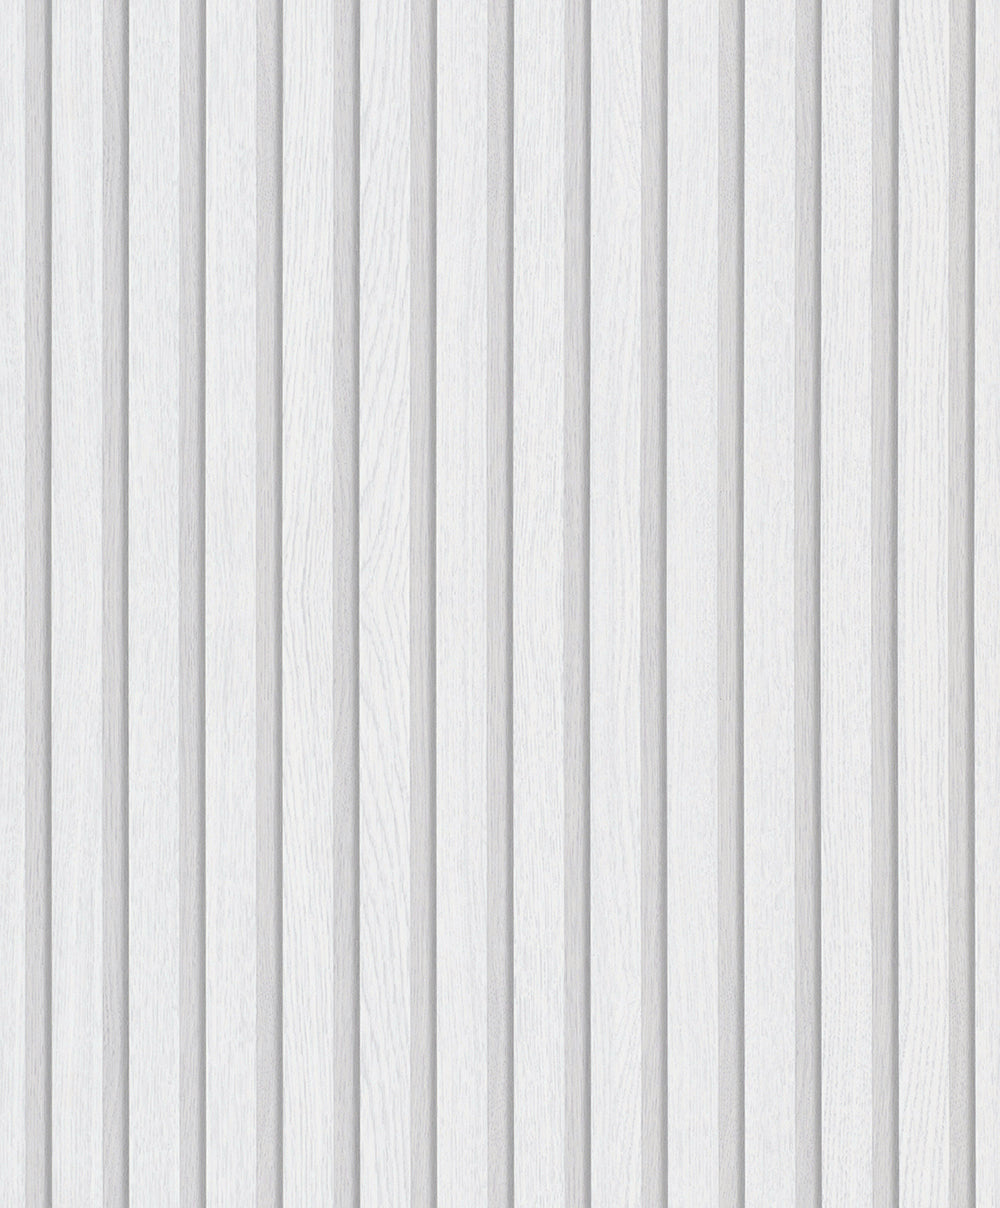 Botanica - Wood Stripe stripe wallpaper Marburg Roll Light Grey  33956 